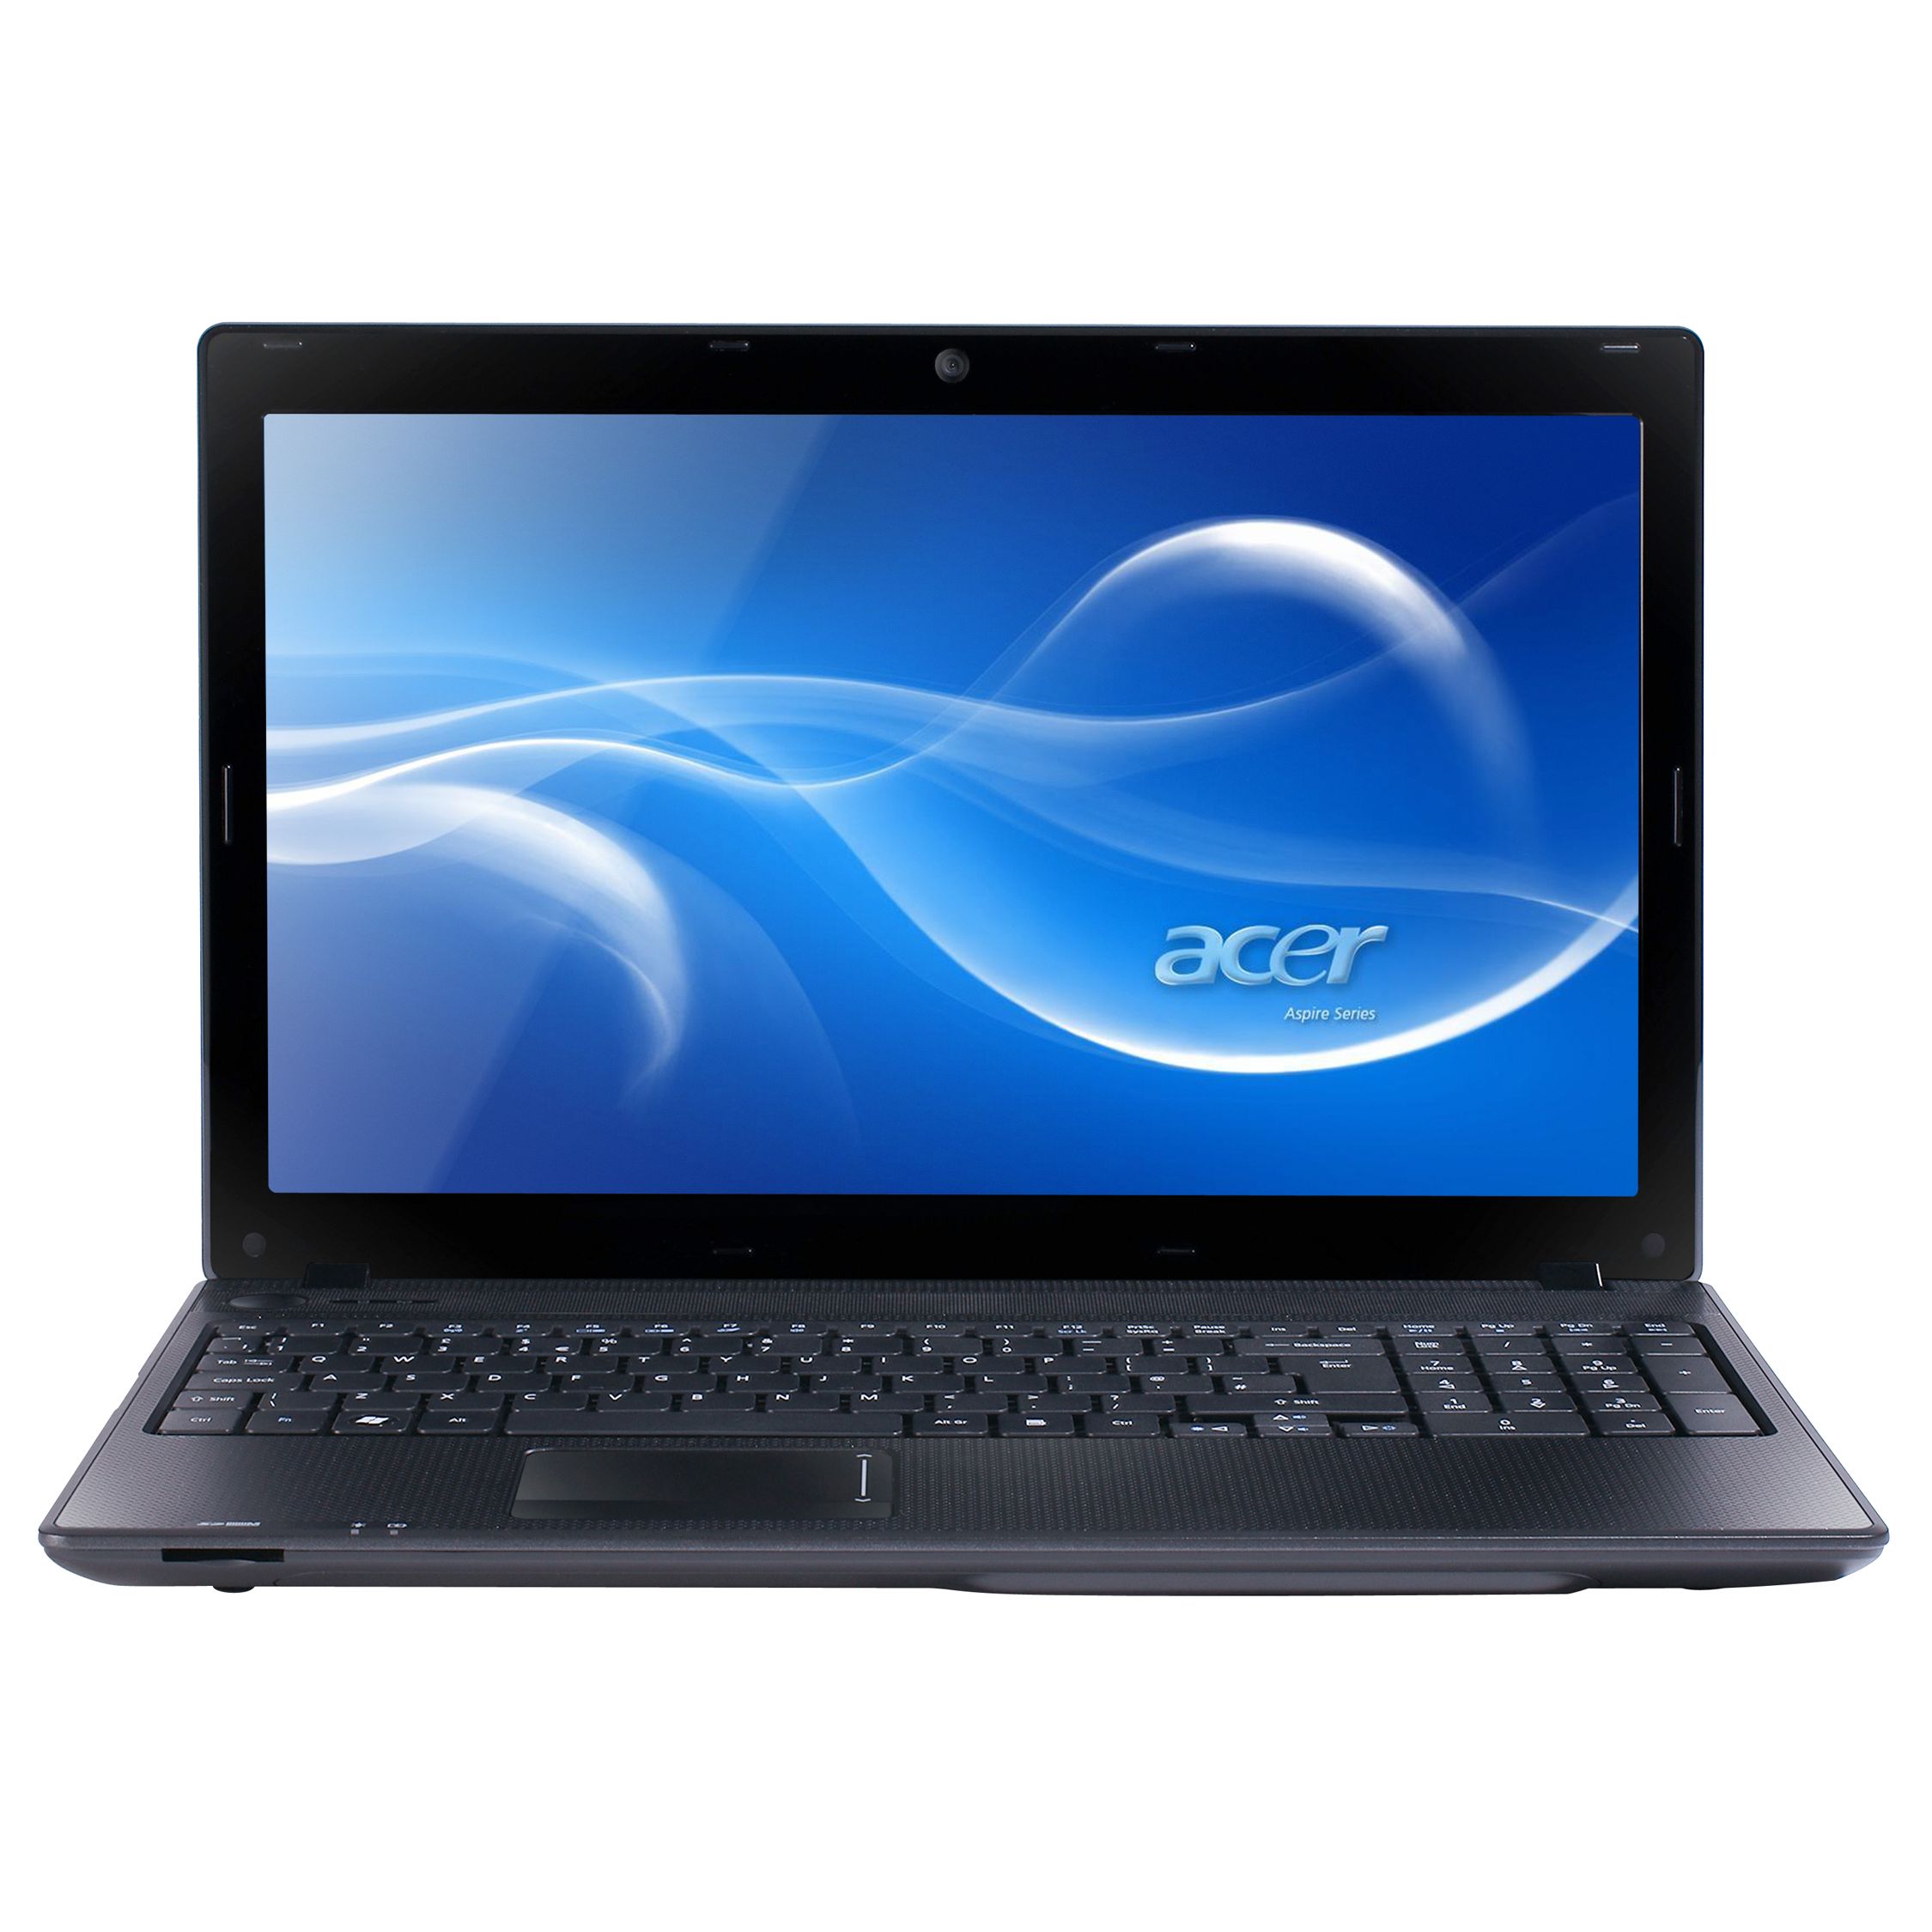 Acer Aspire 5552 Laptop, AMD Athlon II, 500GB, 2.1GHz, 4GB RAM with 15.6 Inch Display, Black at John Lewis